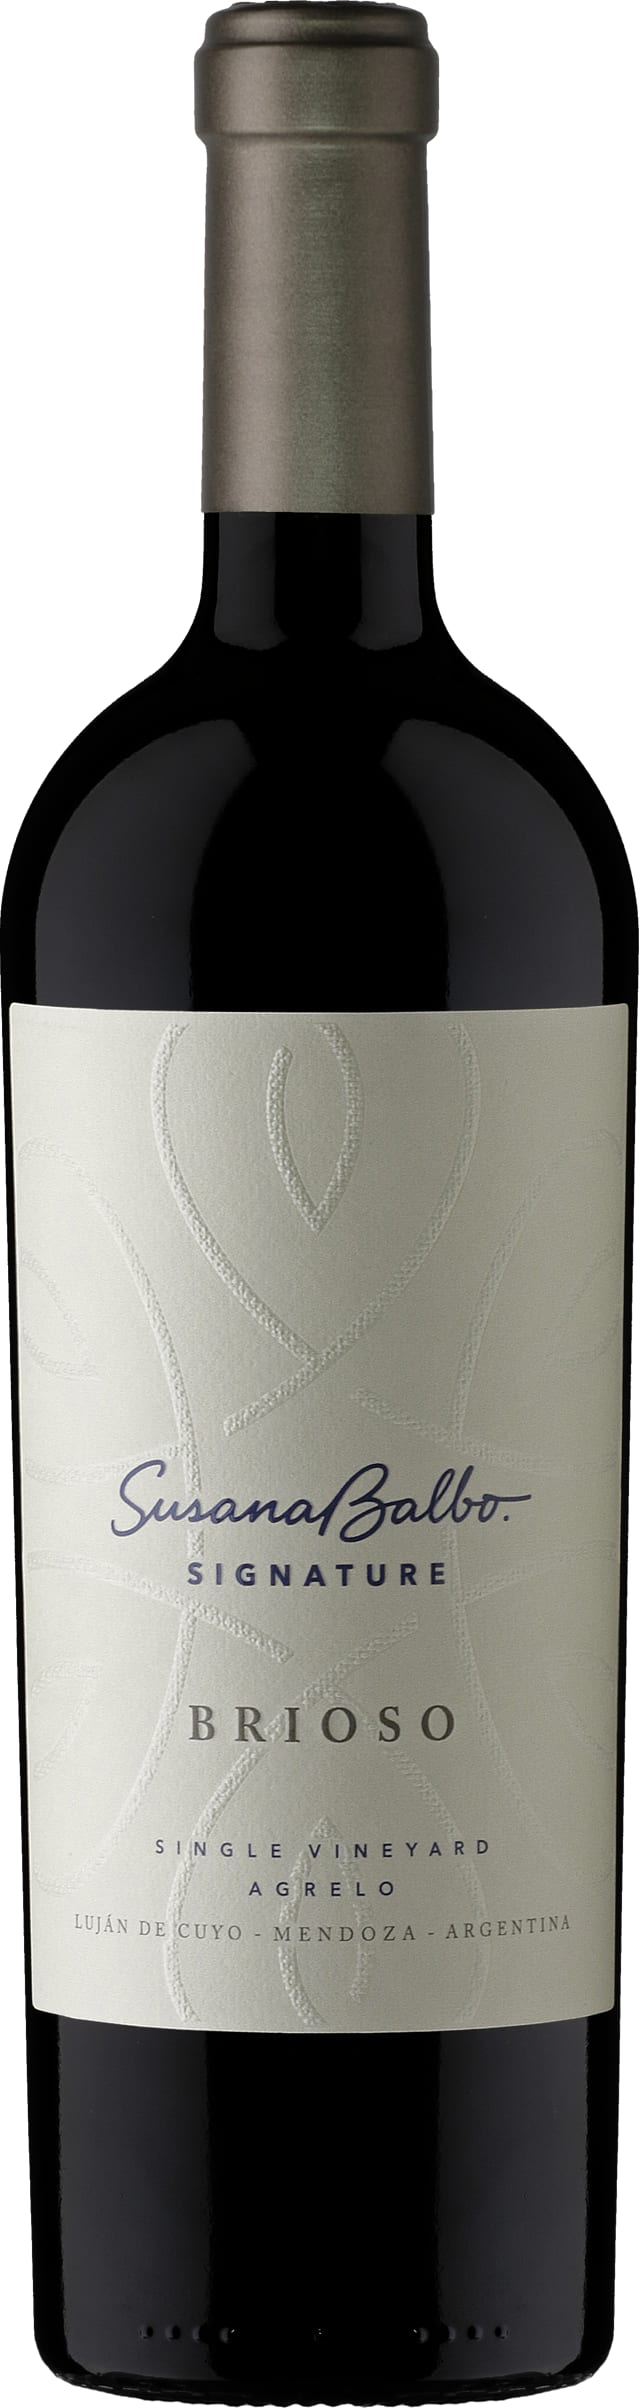 Susana Balbo Brioso Cabernets, Malbec and Petit Verdot 2020 75cl - Buy Susana Balbo Wines from GREAT WINES DIRECT wine shop